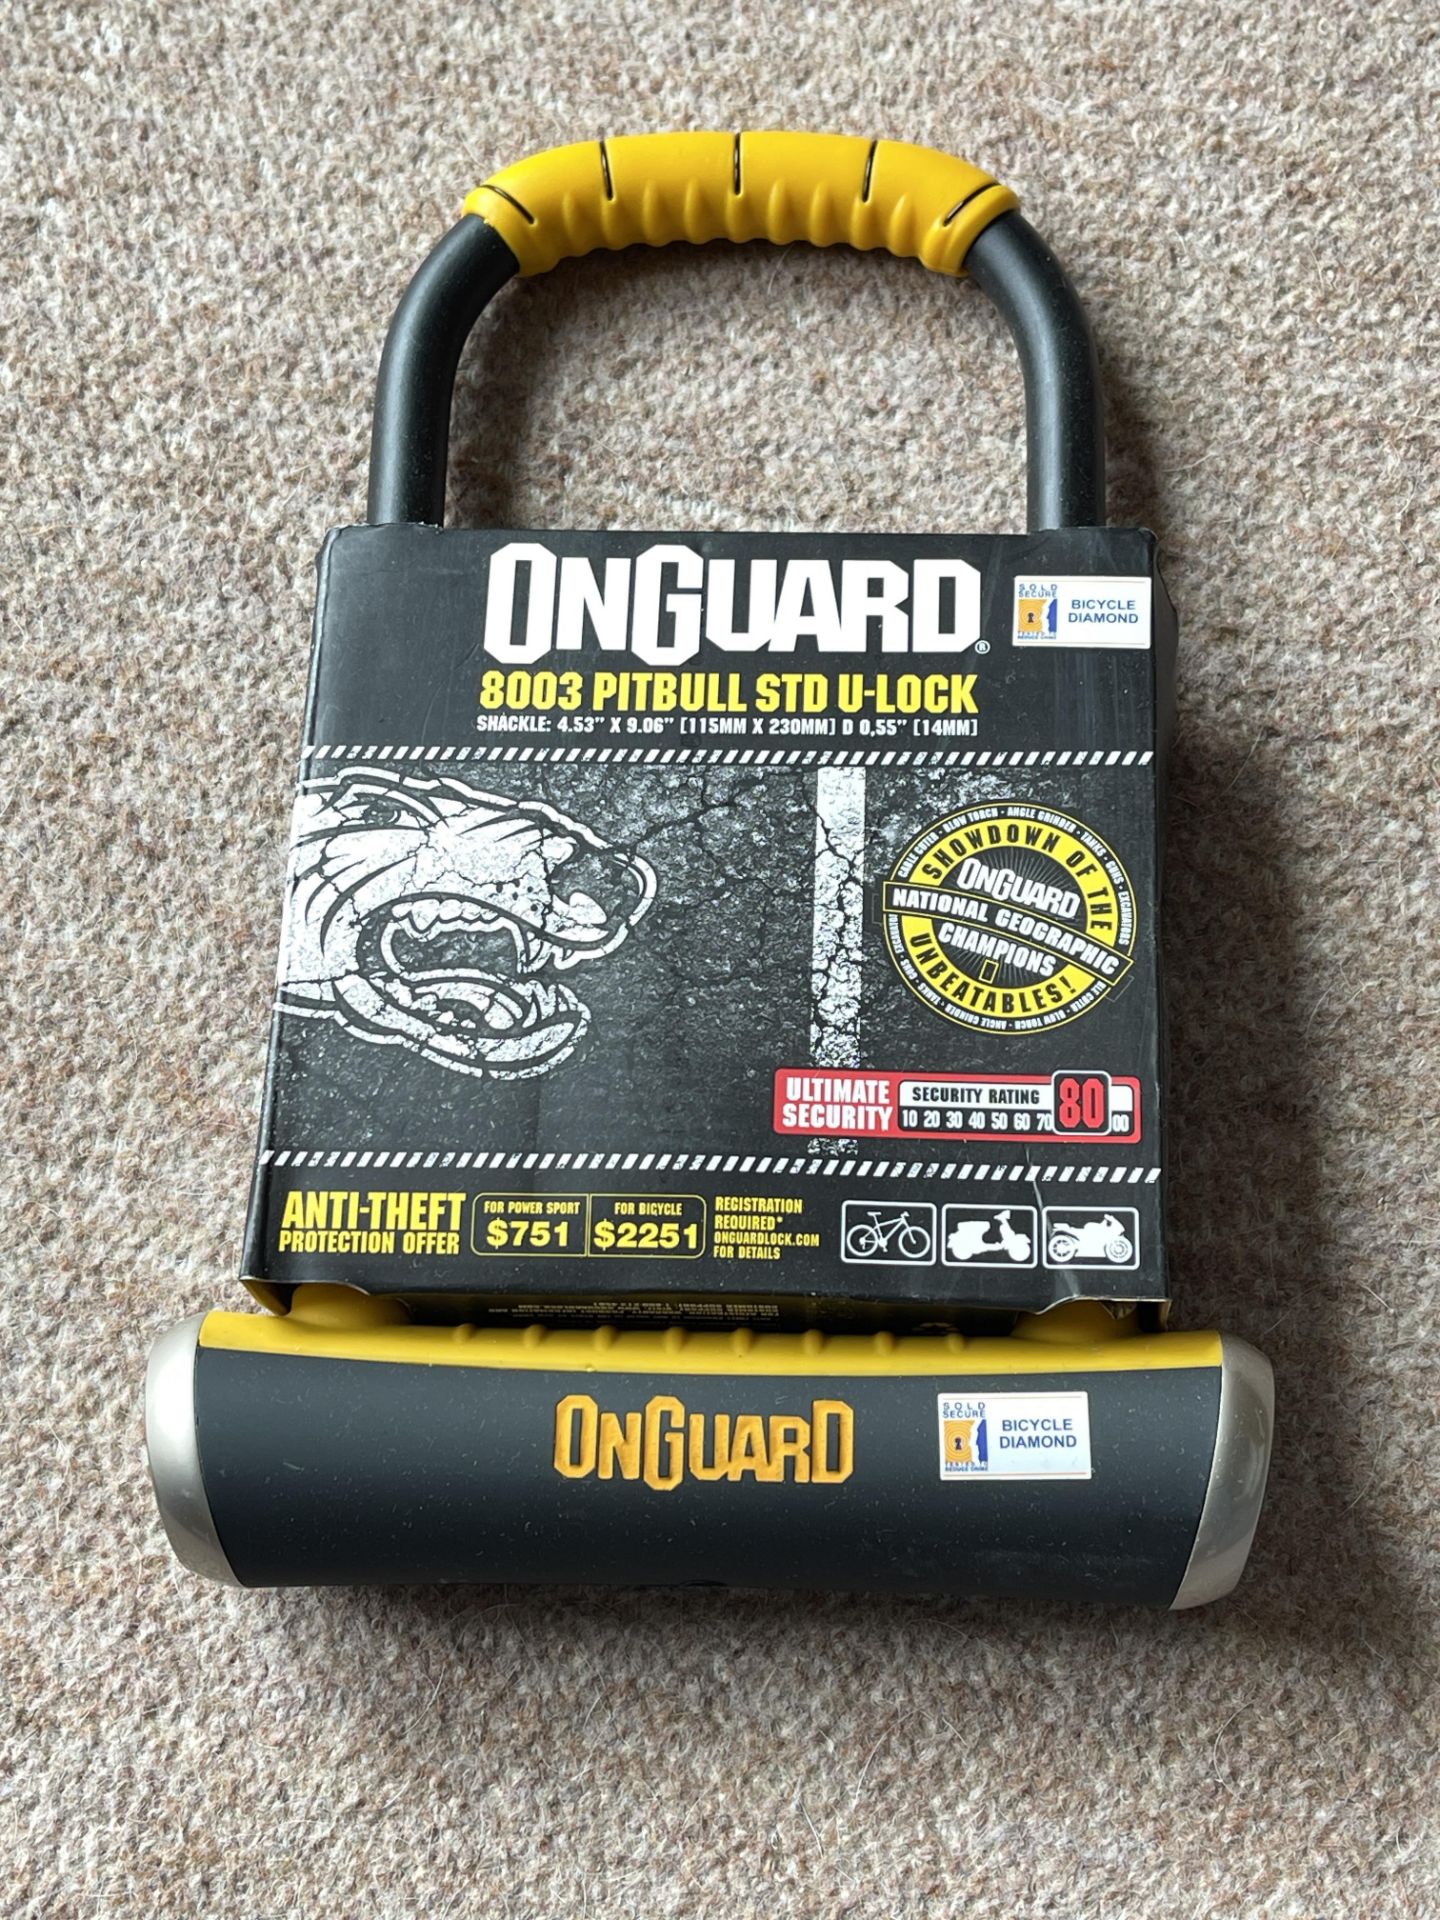 OnGuard Bike lock